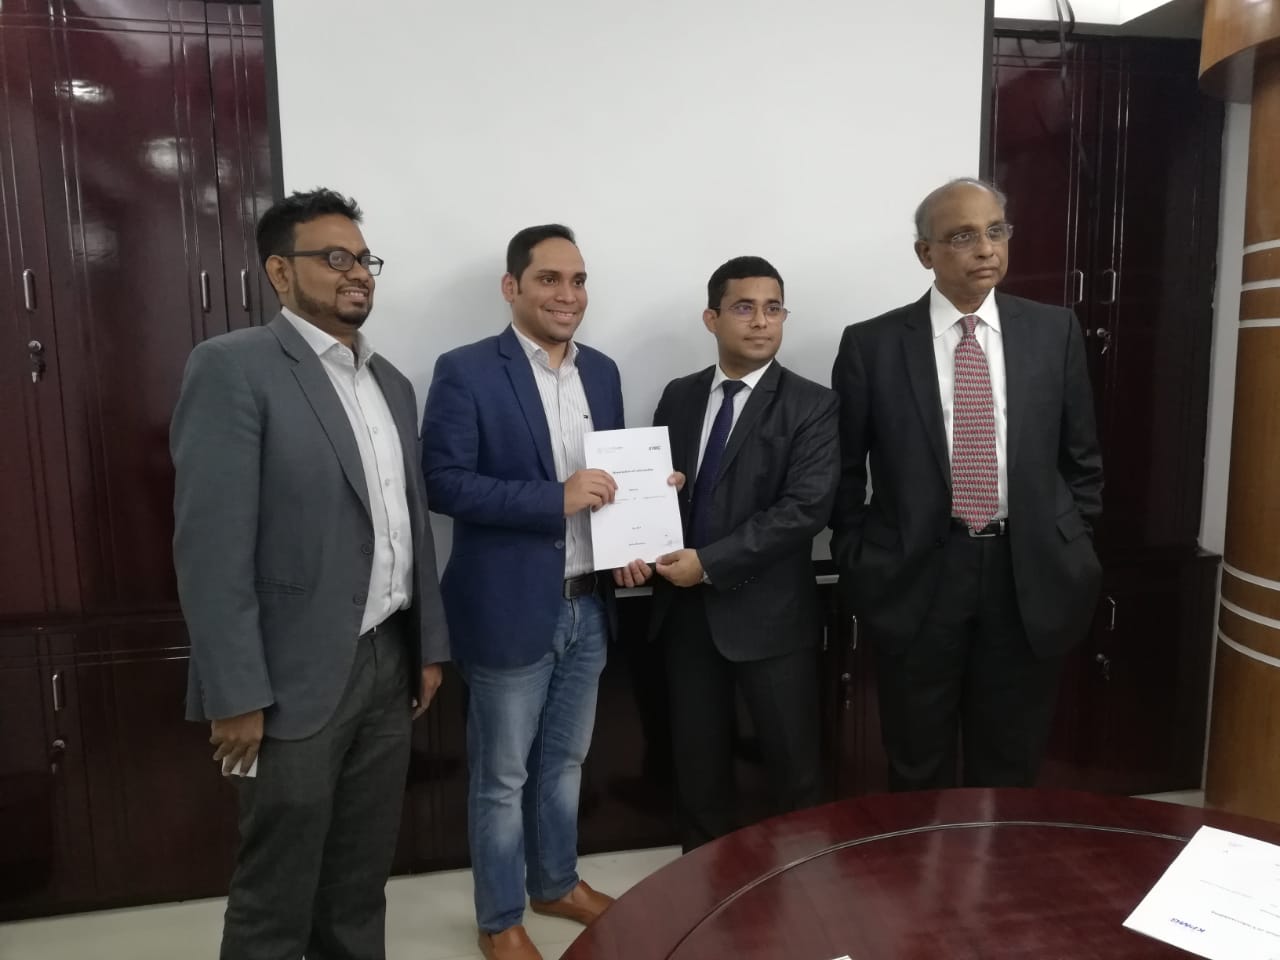 LightCastle signs MoU with KPMG Bangladesh